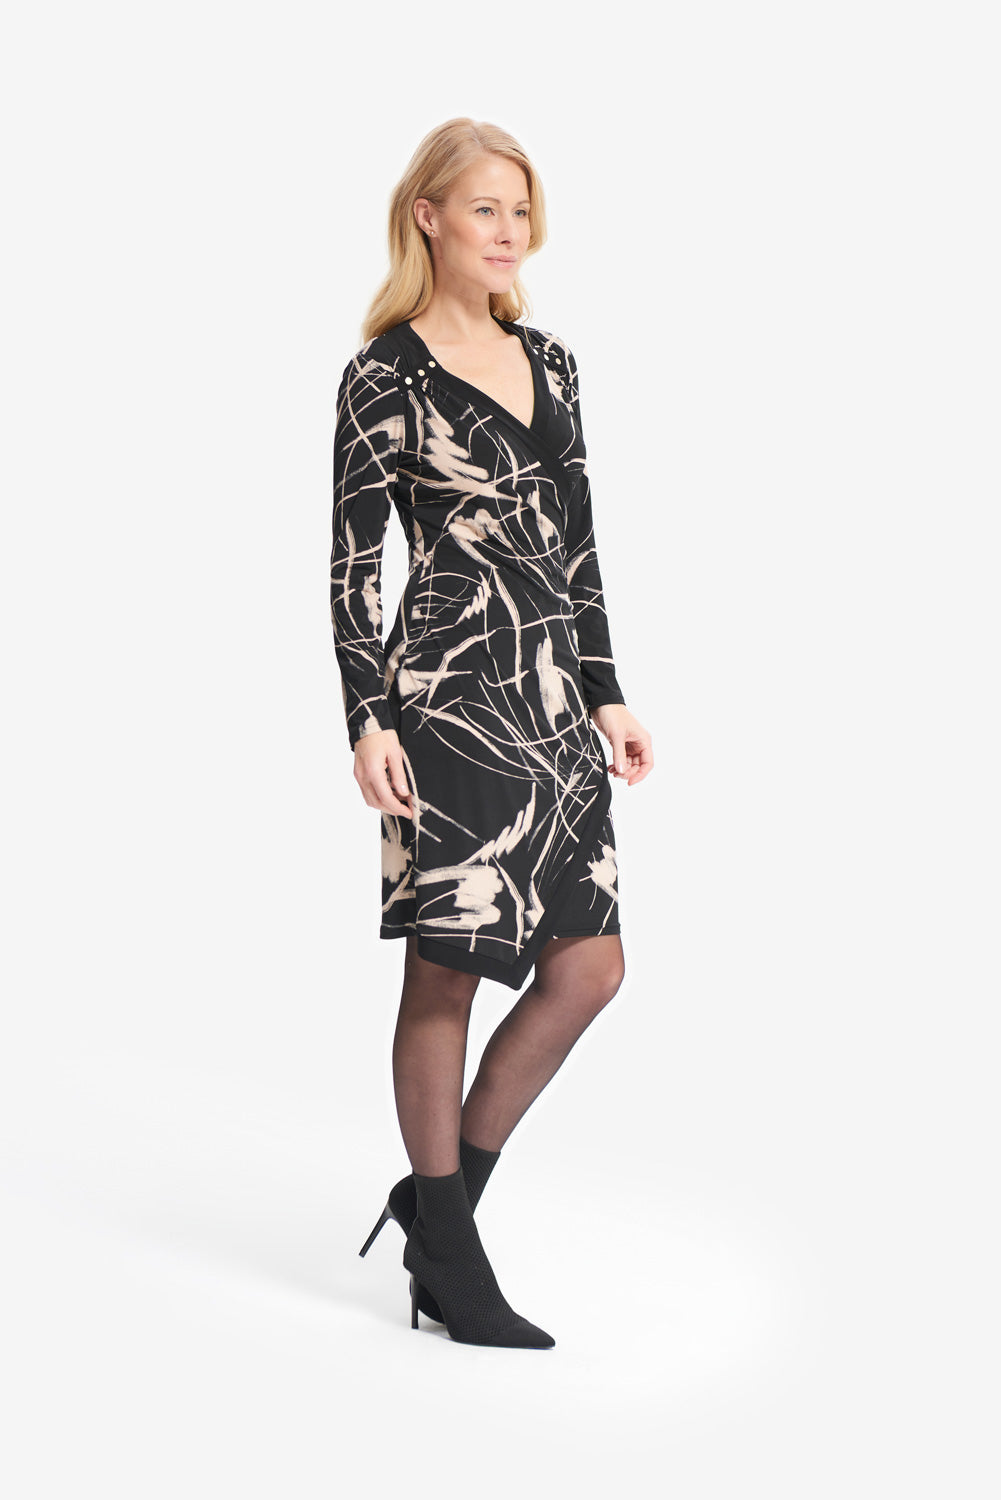 Joseph Ribkoff Black-Sand Wrap Front Dress Style 214290